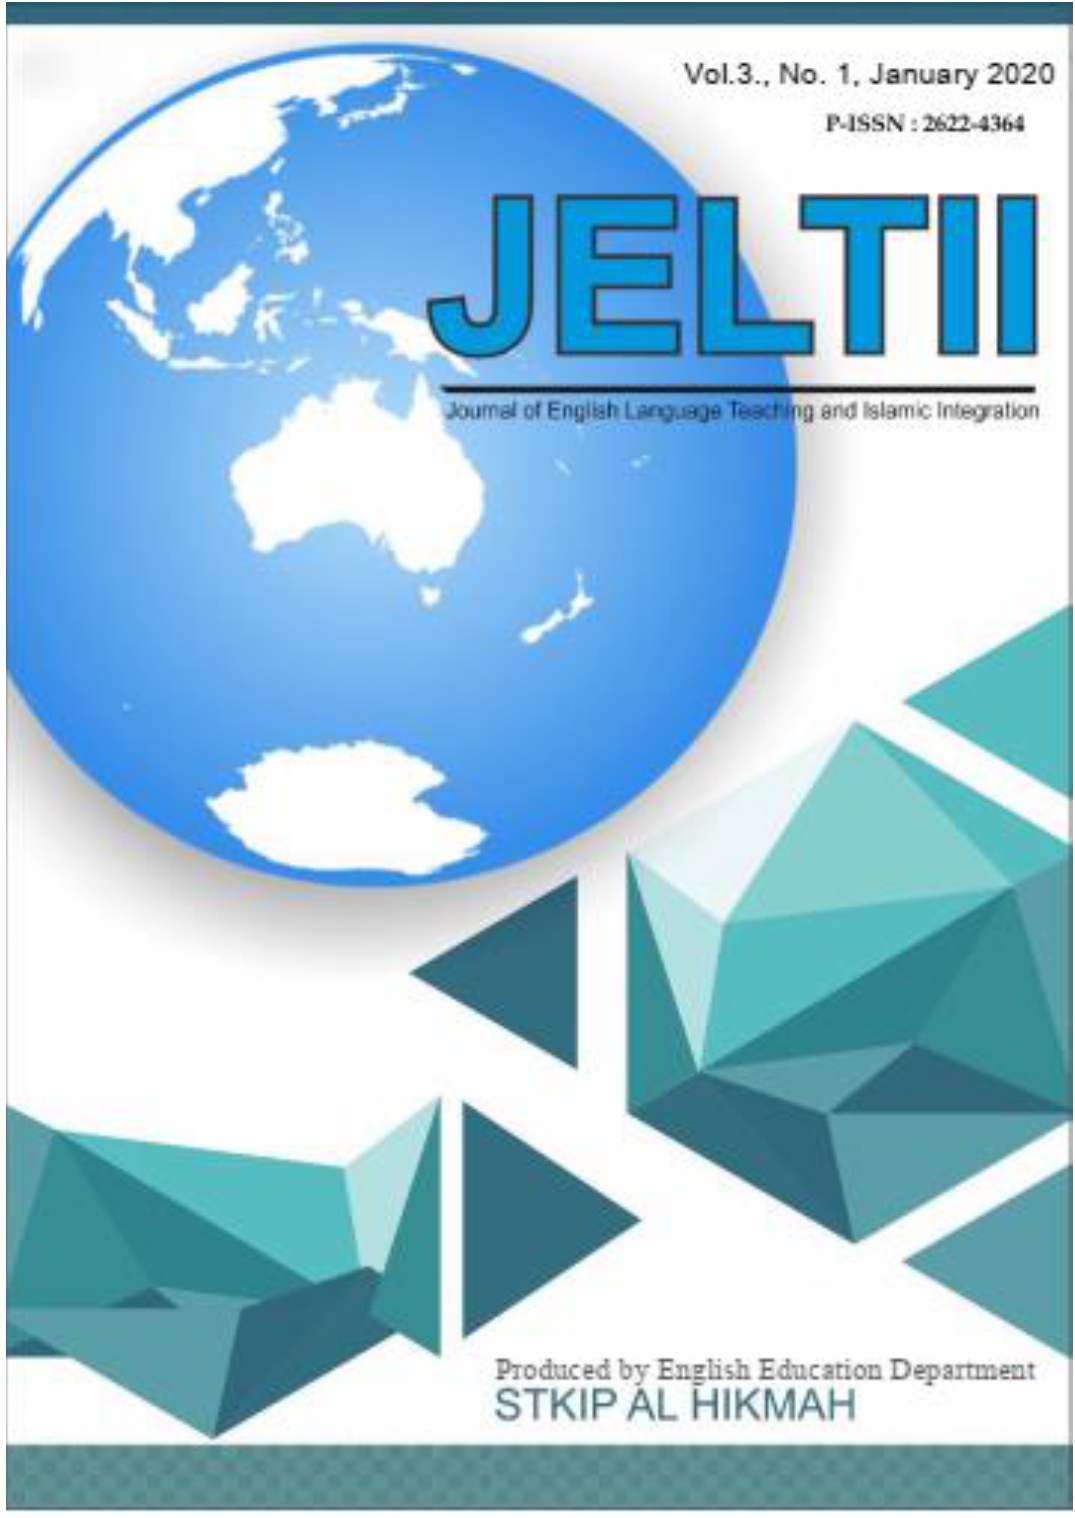 					View Vol. 3 No. 02 (2020): JELTII: Journal of English Language Teaching and Islamic Integration
				